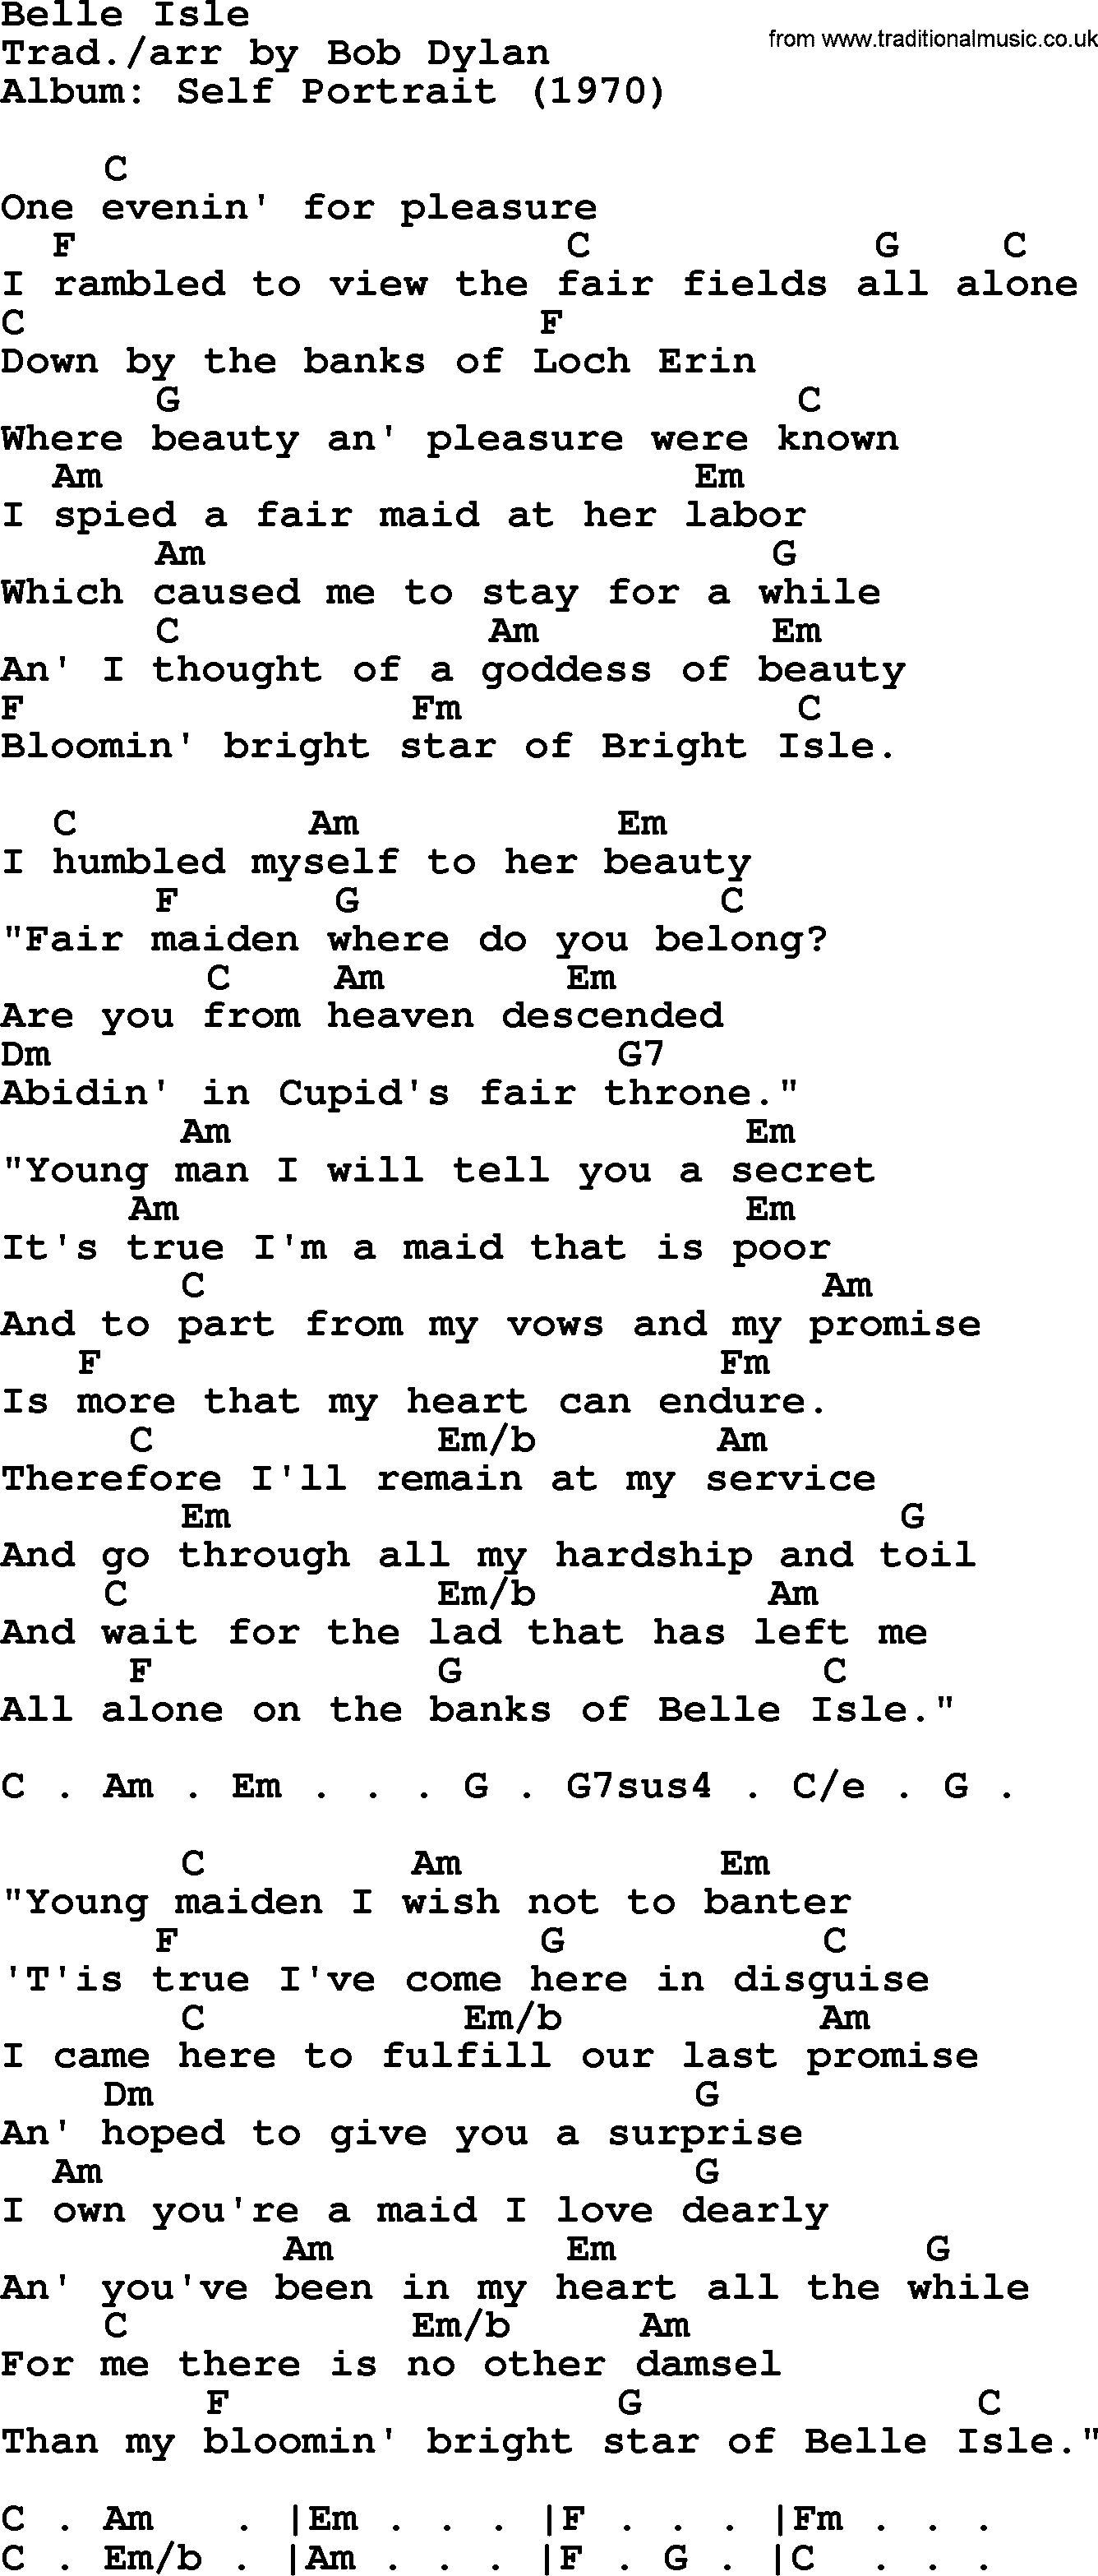 Bob Dylan song, lyrics with chords - Belle Isle